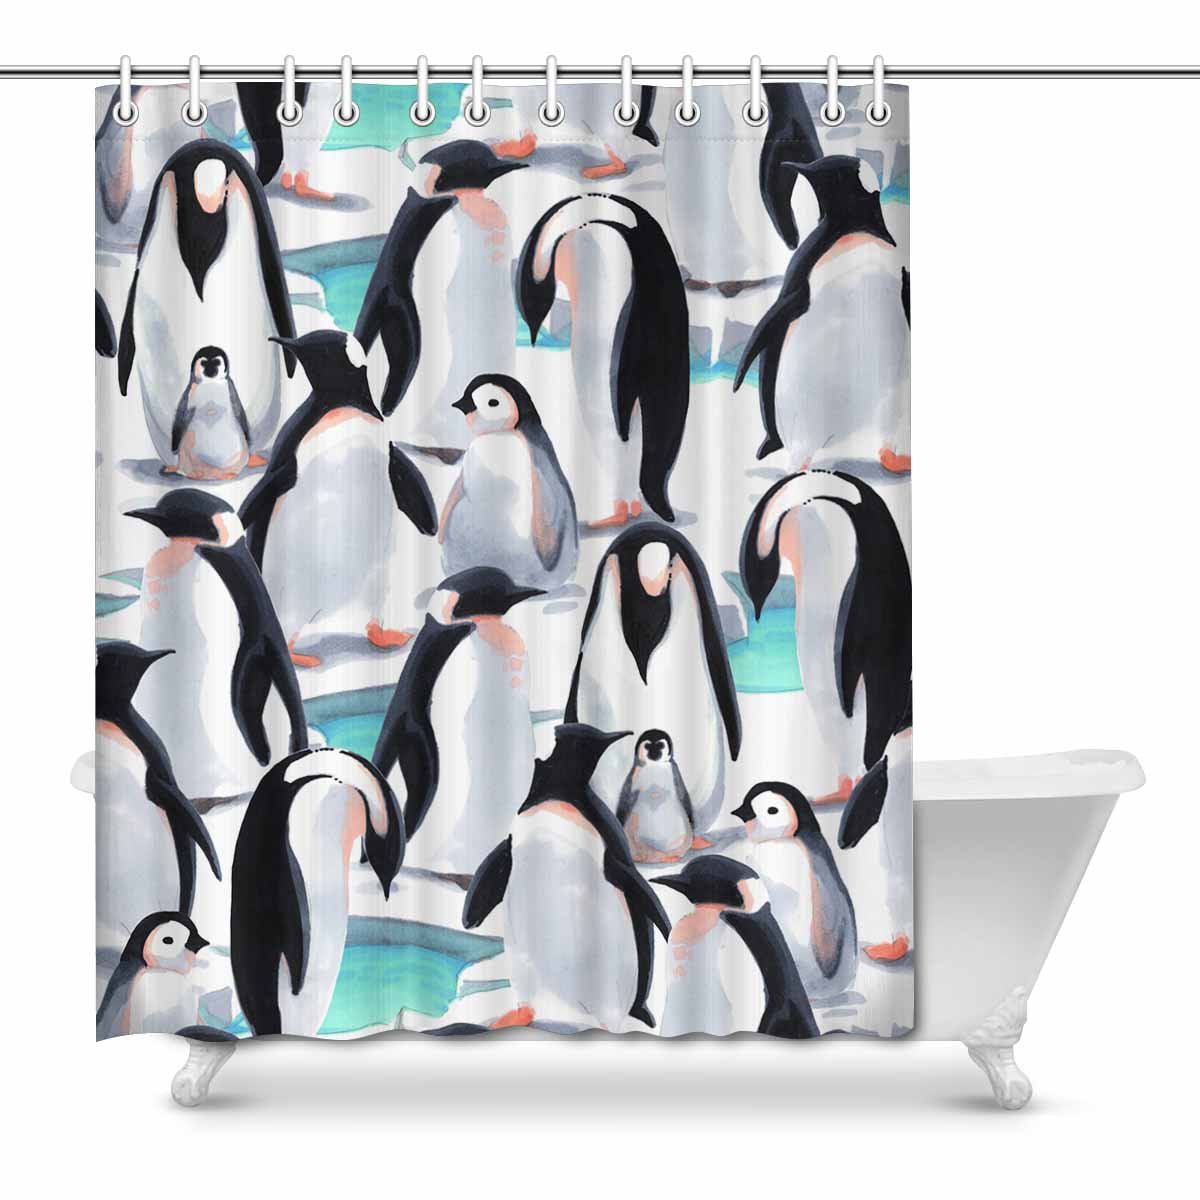 Penguin Waterproof Polyester Fabric Home Decor Shower Curtain Bathroom Mat Set 